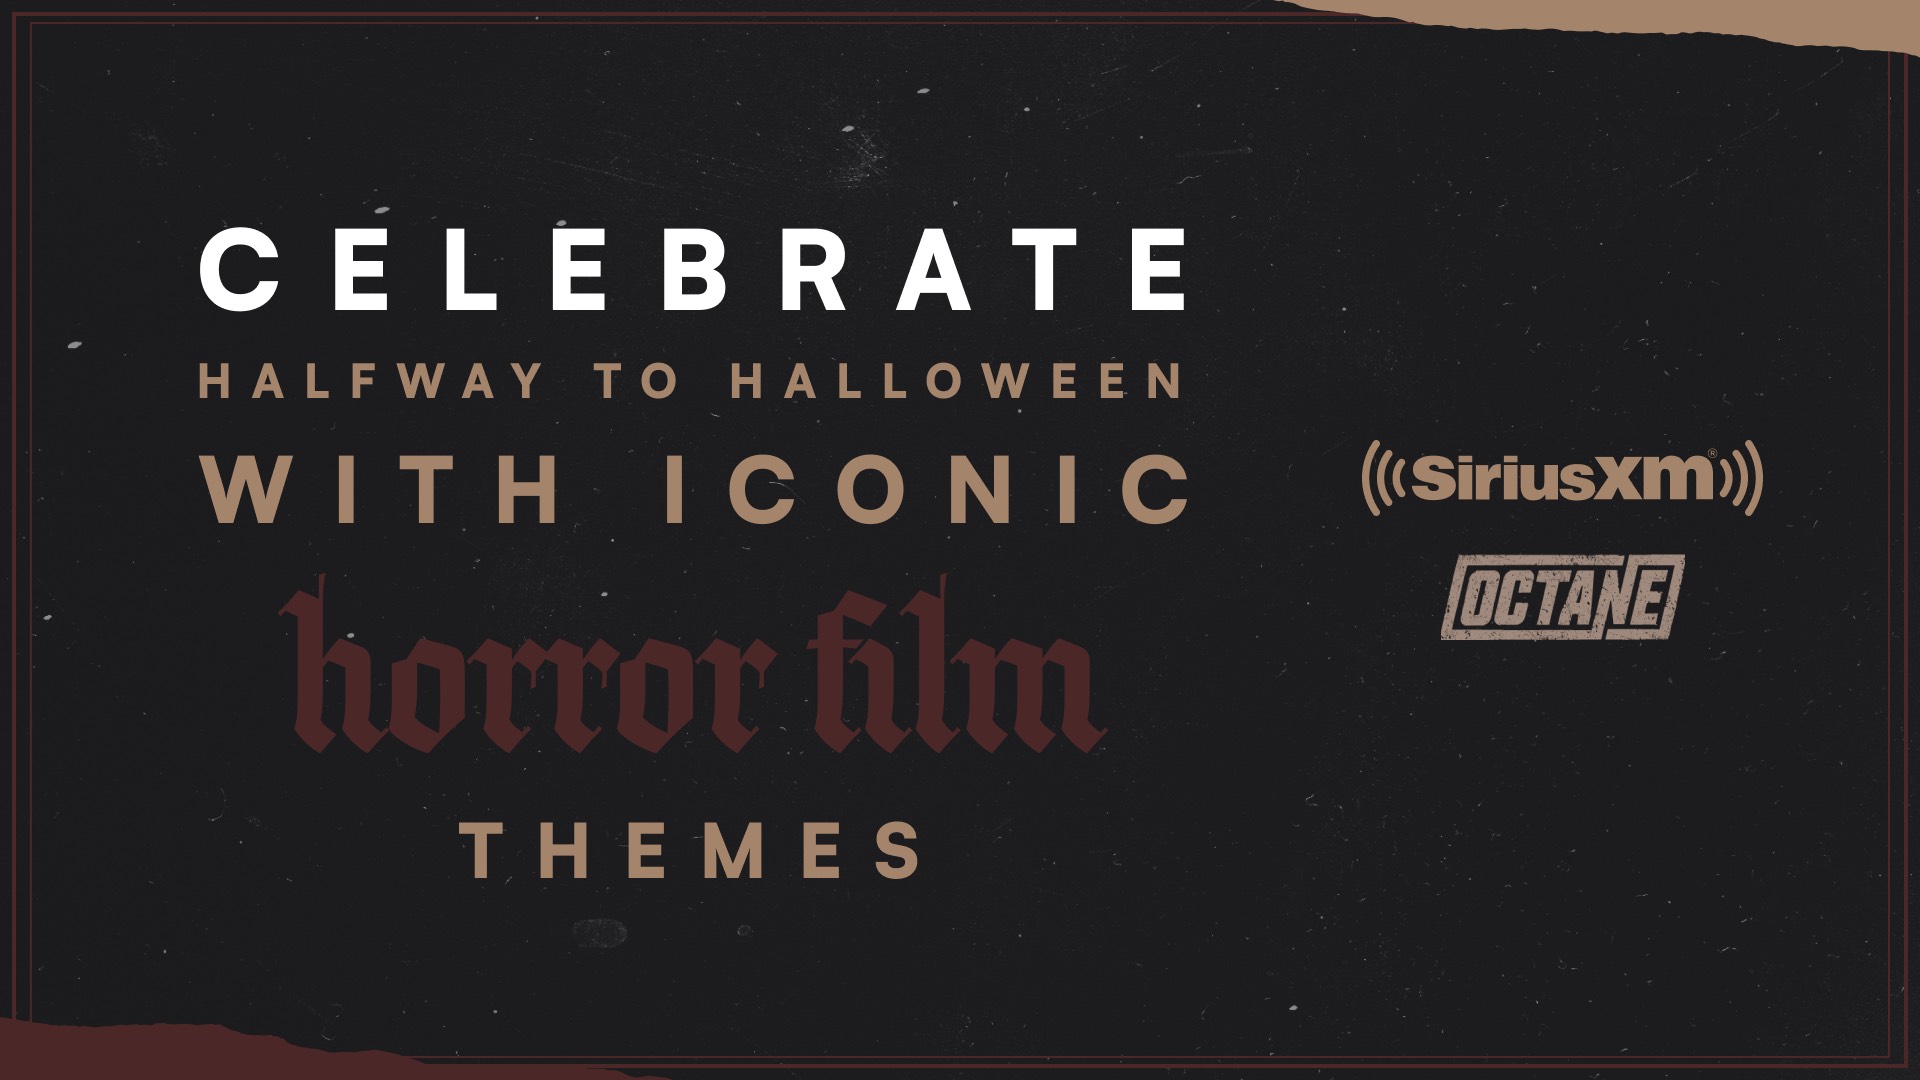 Halfway to Halloween - Iconic Horror Film Themes - SiriusXM Octane